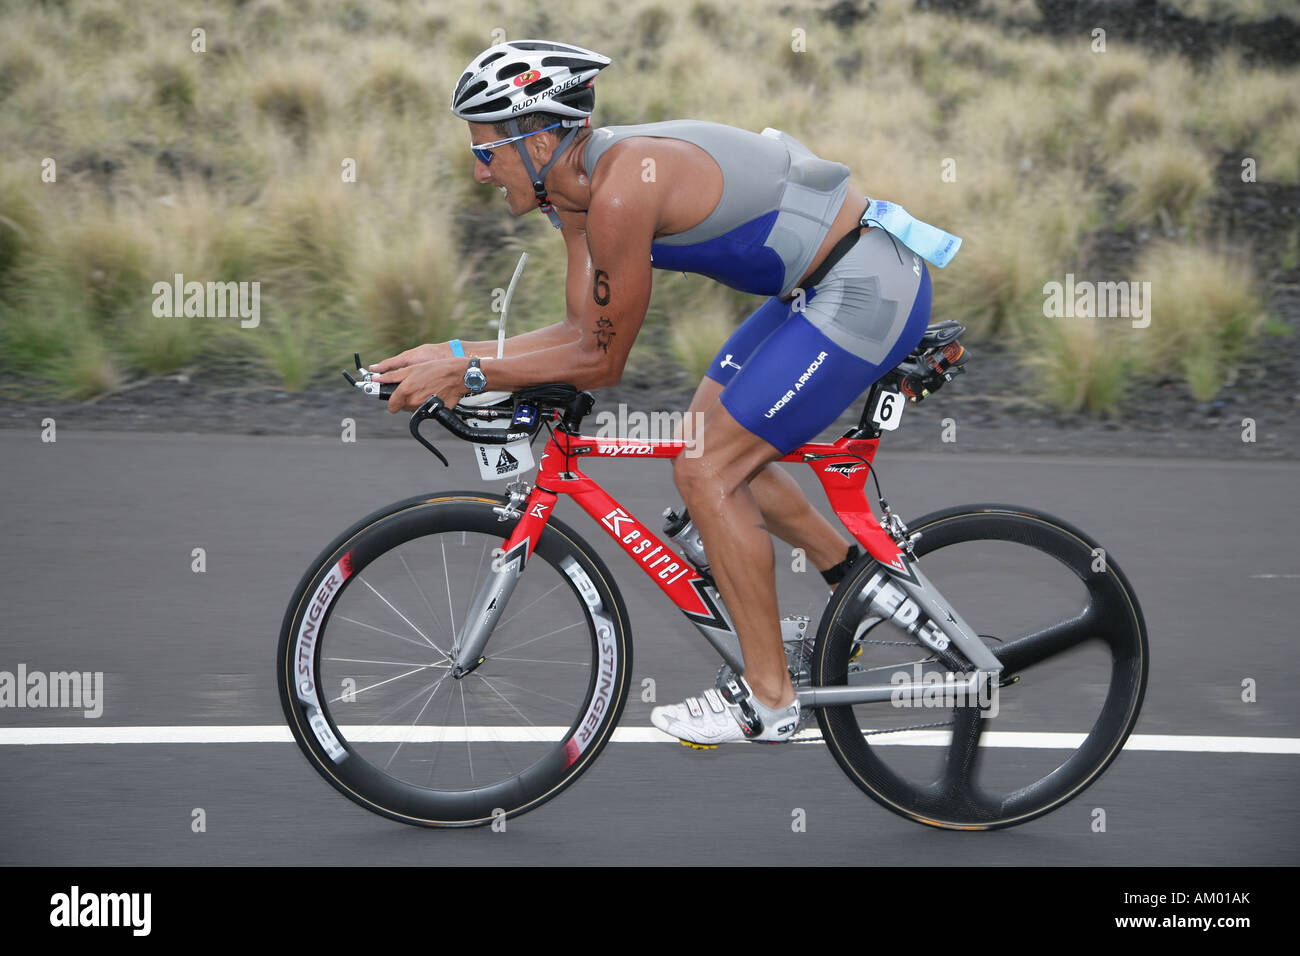 Ironman-Triathlet Chris McCormack from Australia in Hawaii, USA Stock Photo